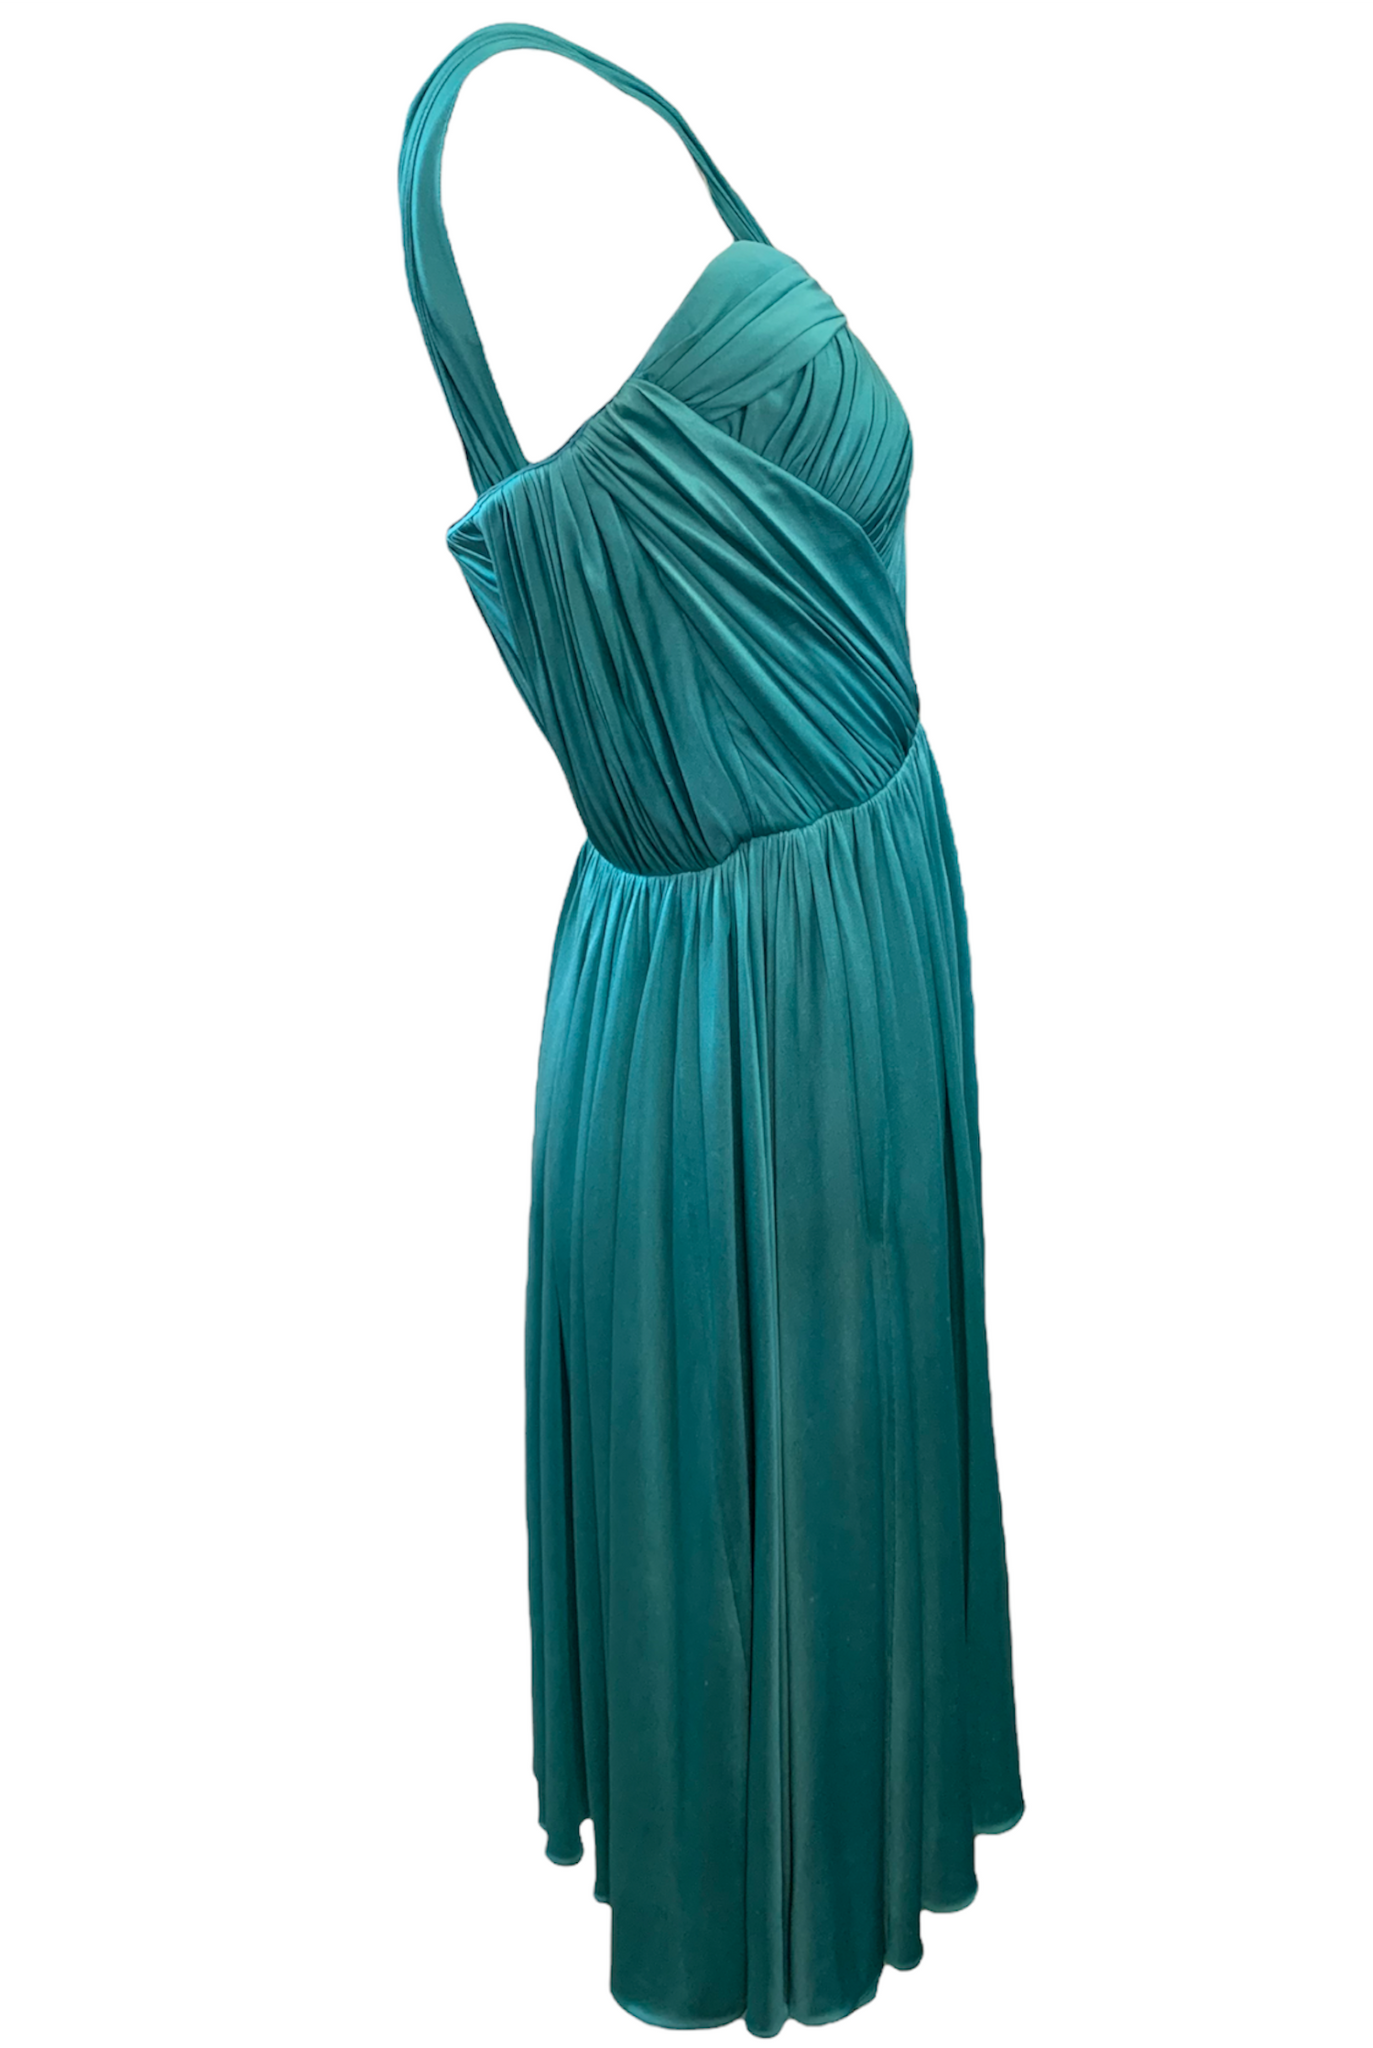 John Galliano for Dior Aqua Silk Jersey Cocktail Dress SIDE 2 of 6